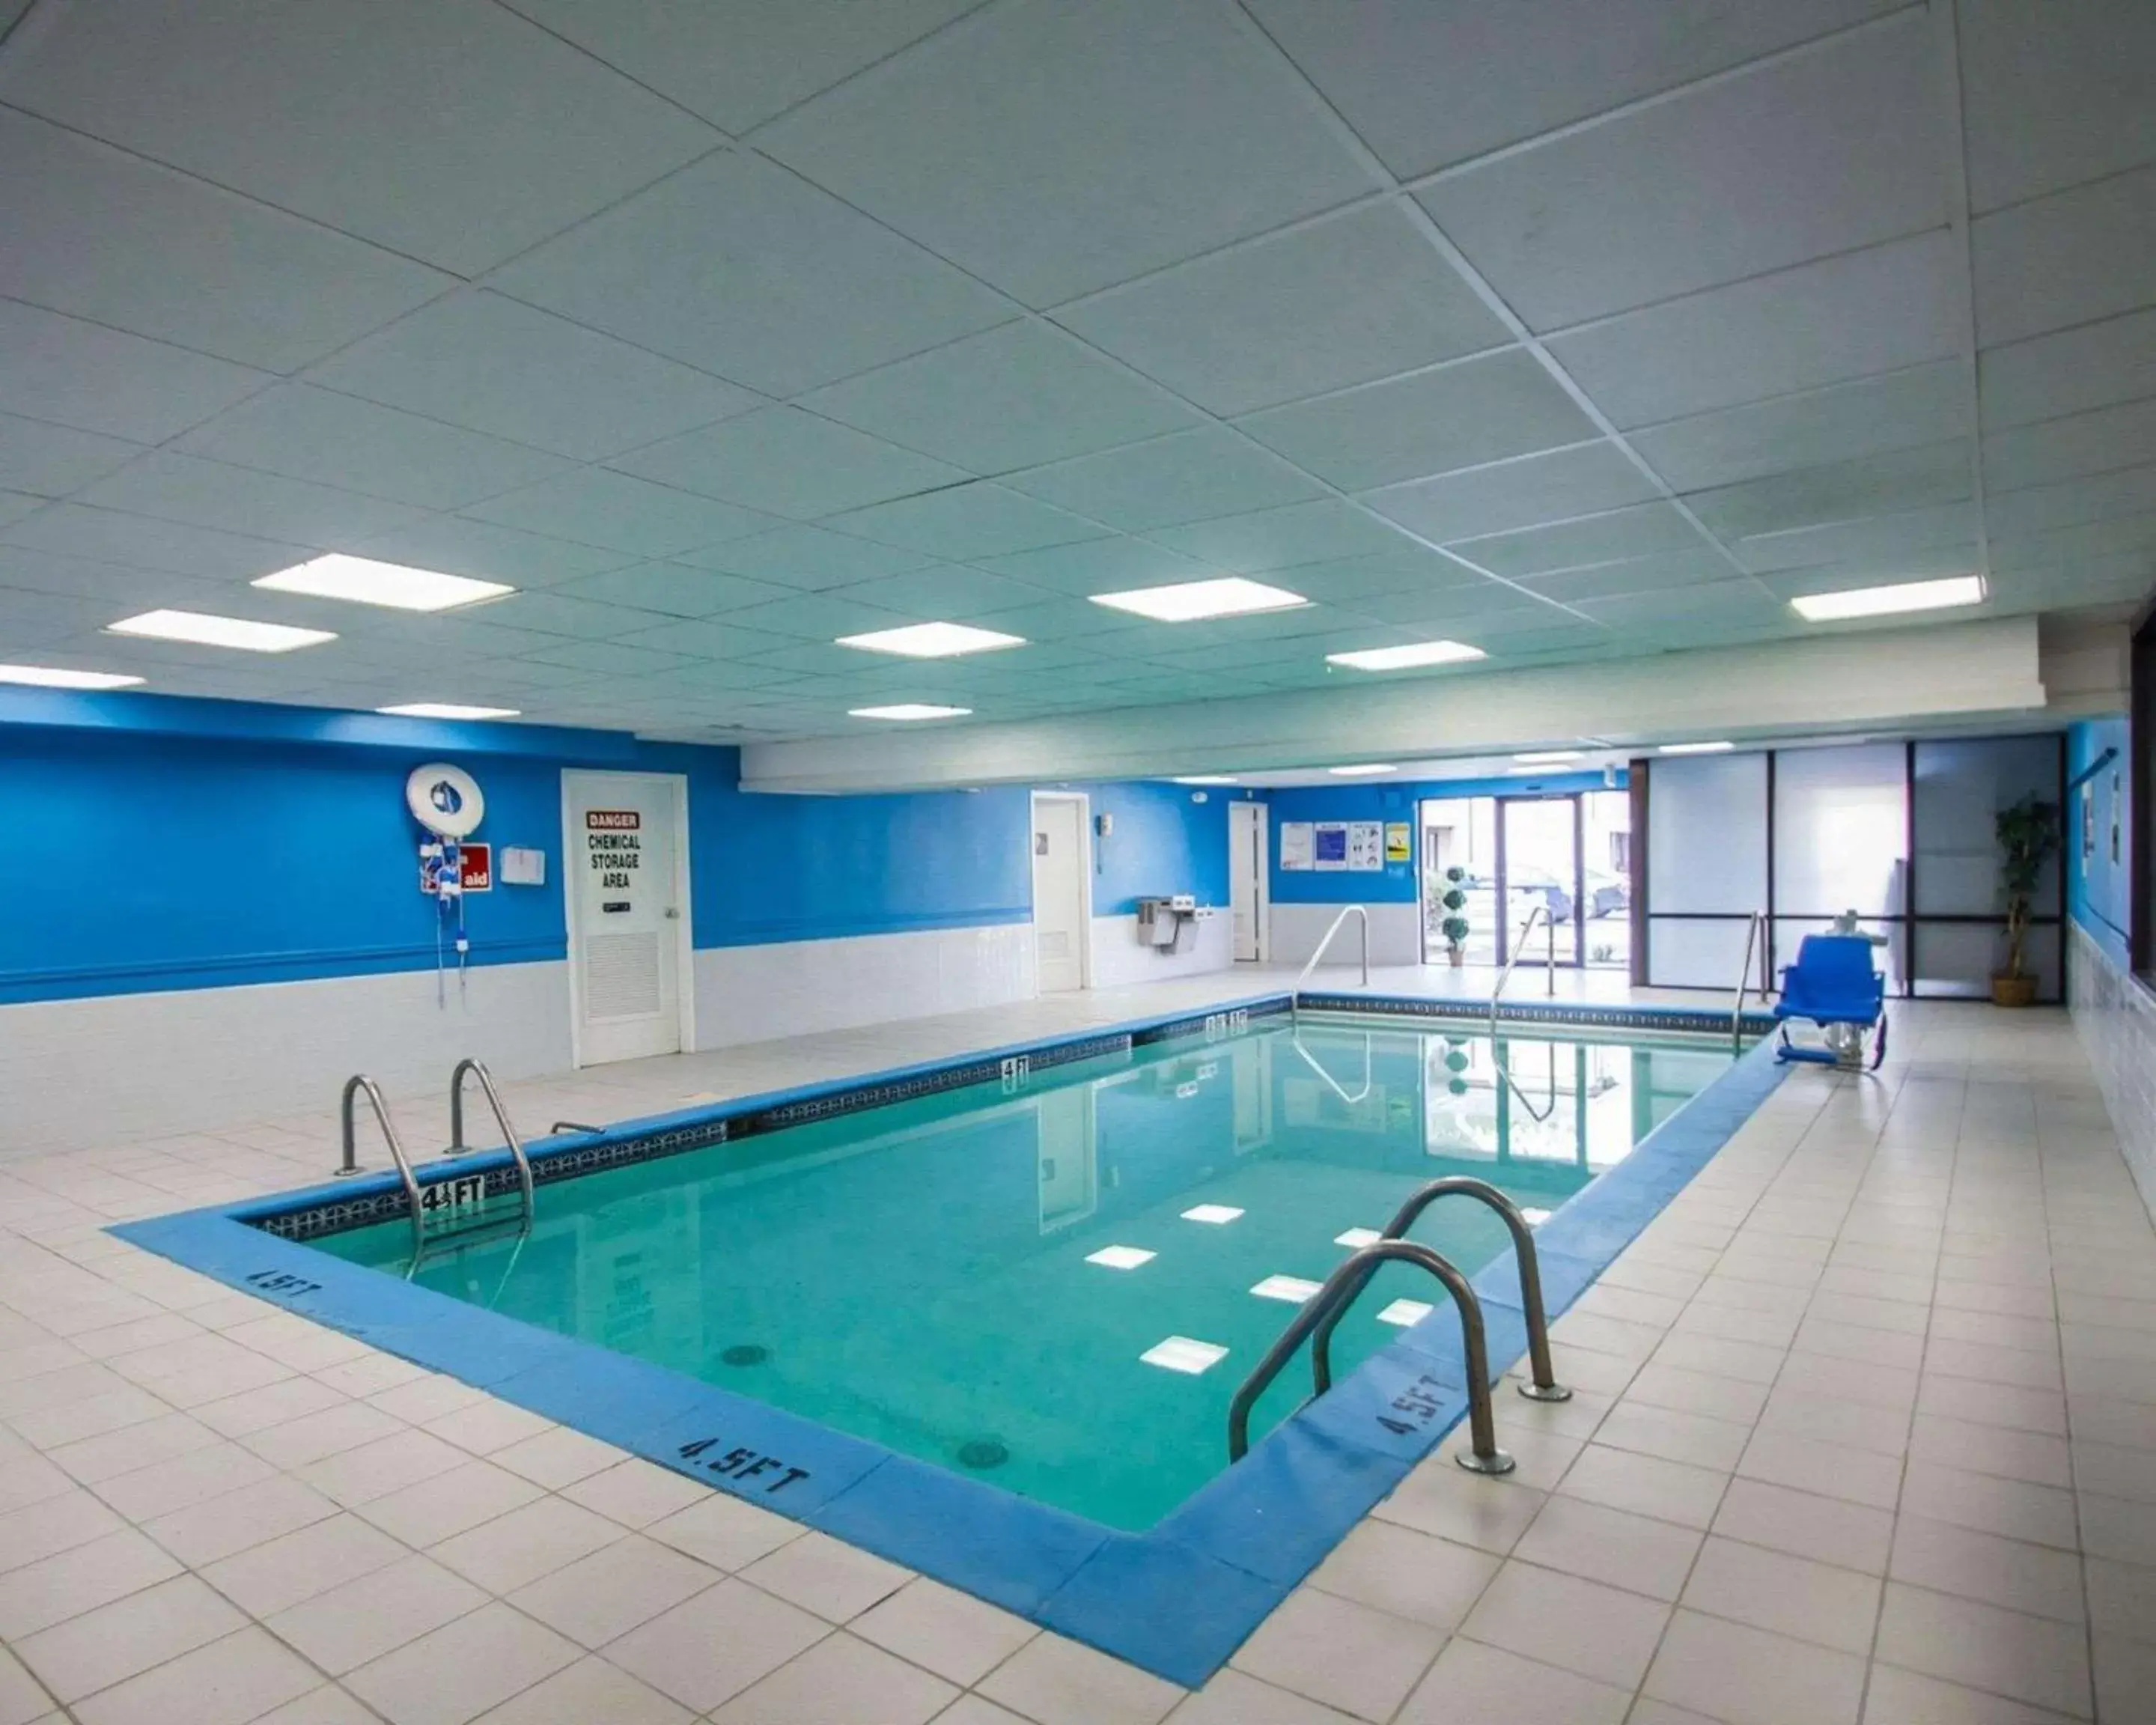 On site, Swimming Pool in Americas Best Value Inn Torrington, CT